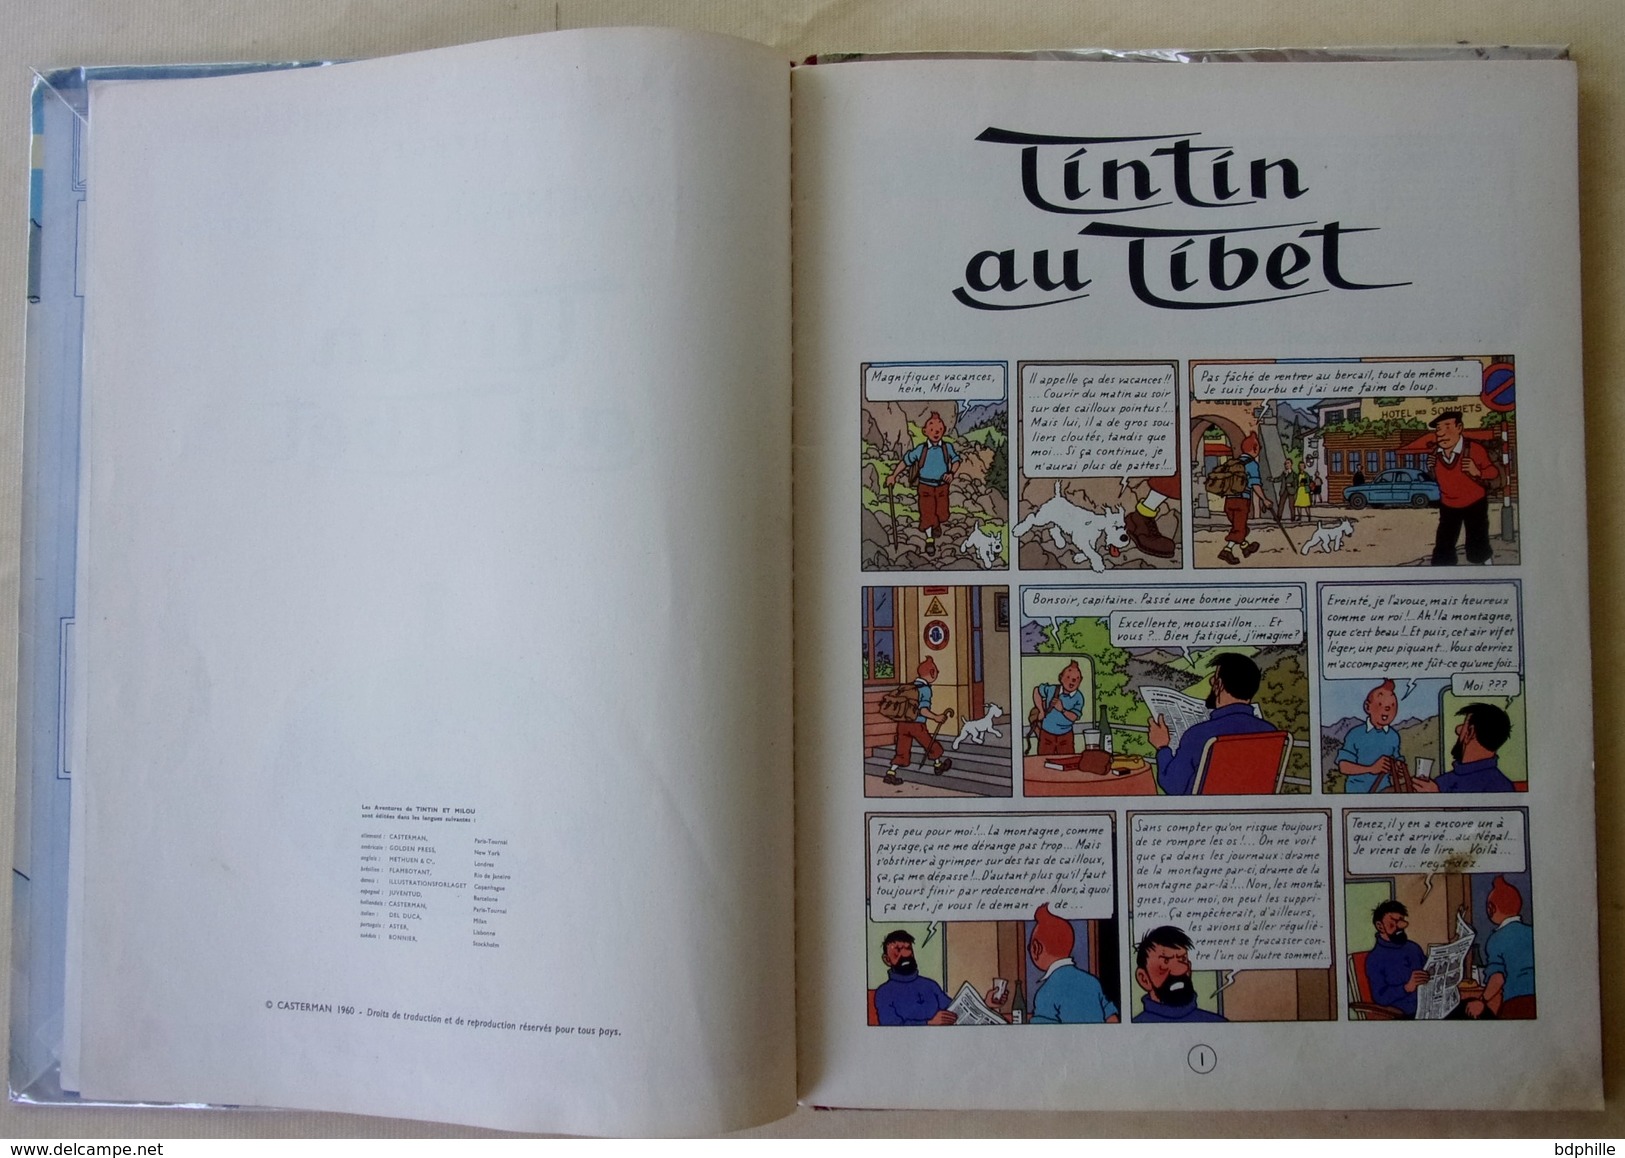 Tintin au Tibet EO 1960 (B29-Imp.Danel- Berets dupond "redoutable"dos rouge foncé)